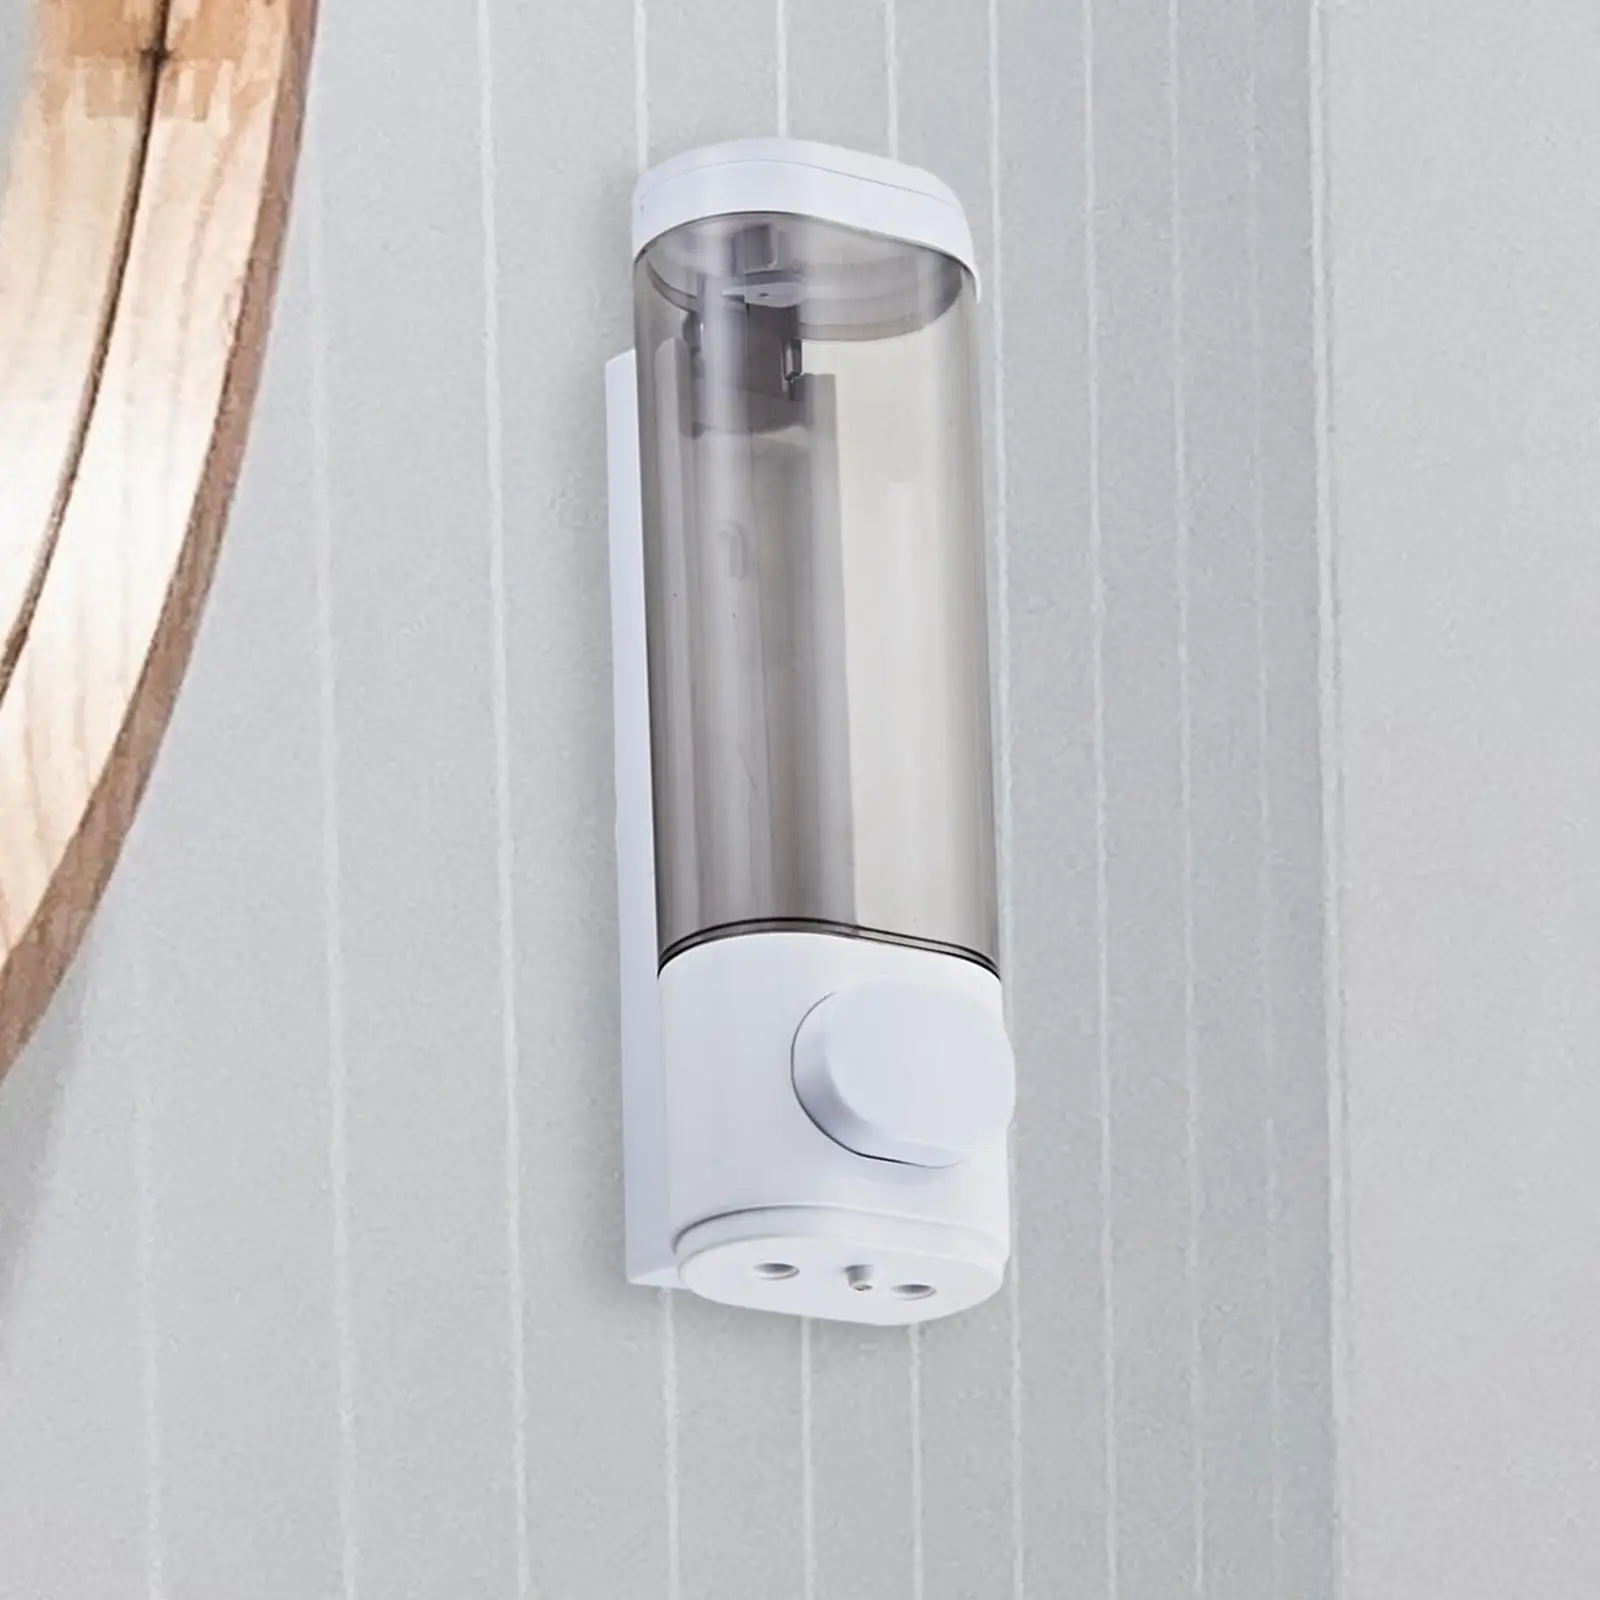 Manual Soap Dispenser Wall Mounted Convenient Durable Liquid Soap Dispenser Hand Control for Bathroom Home Toilet Office Hotel